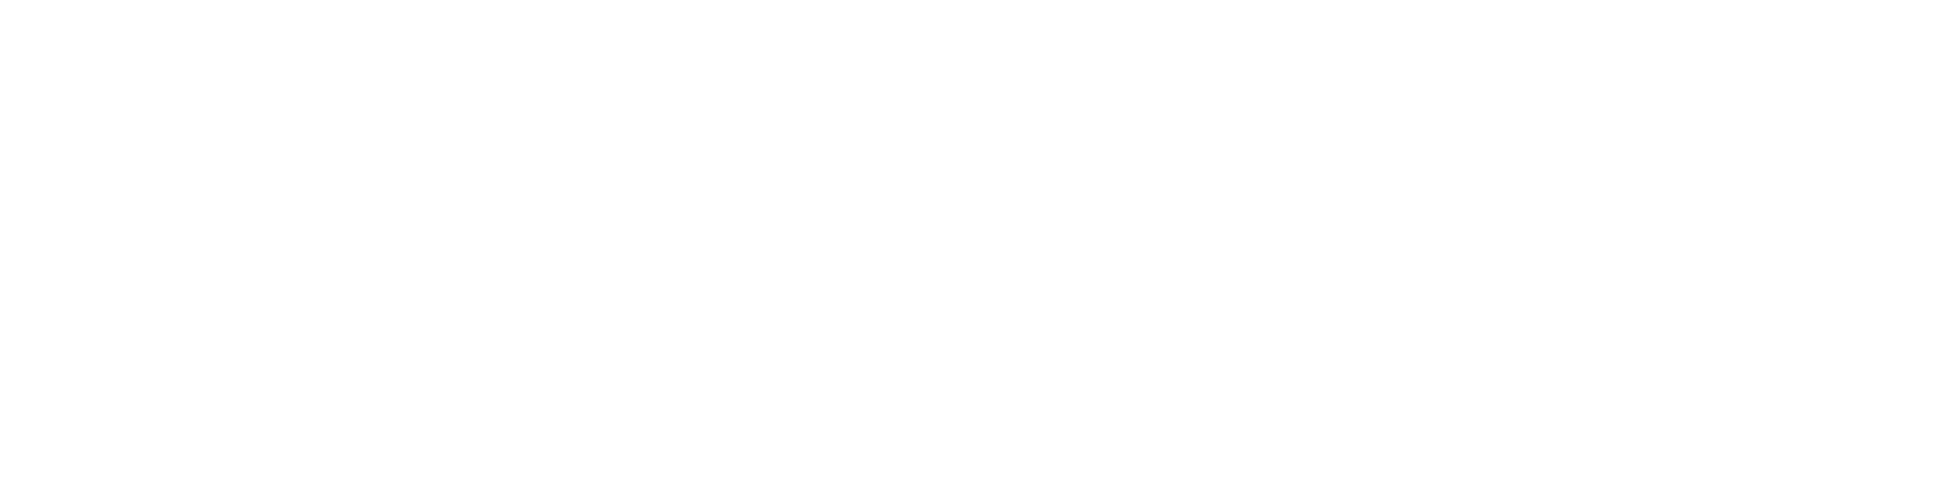 EZBOOK Logo Large White